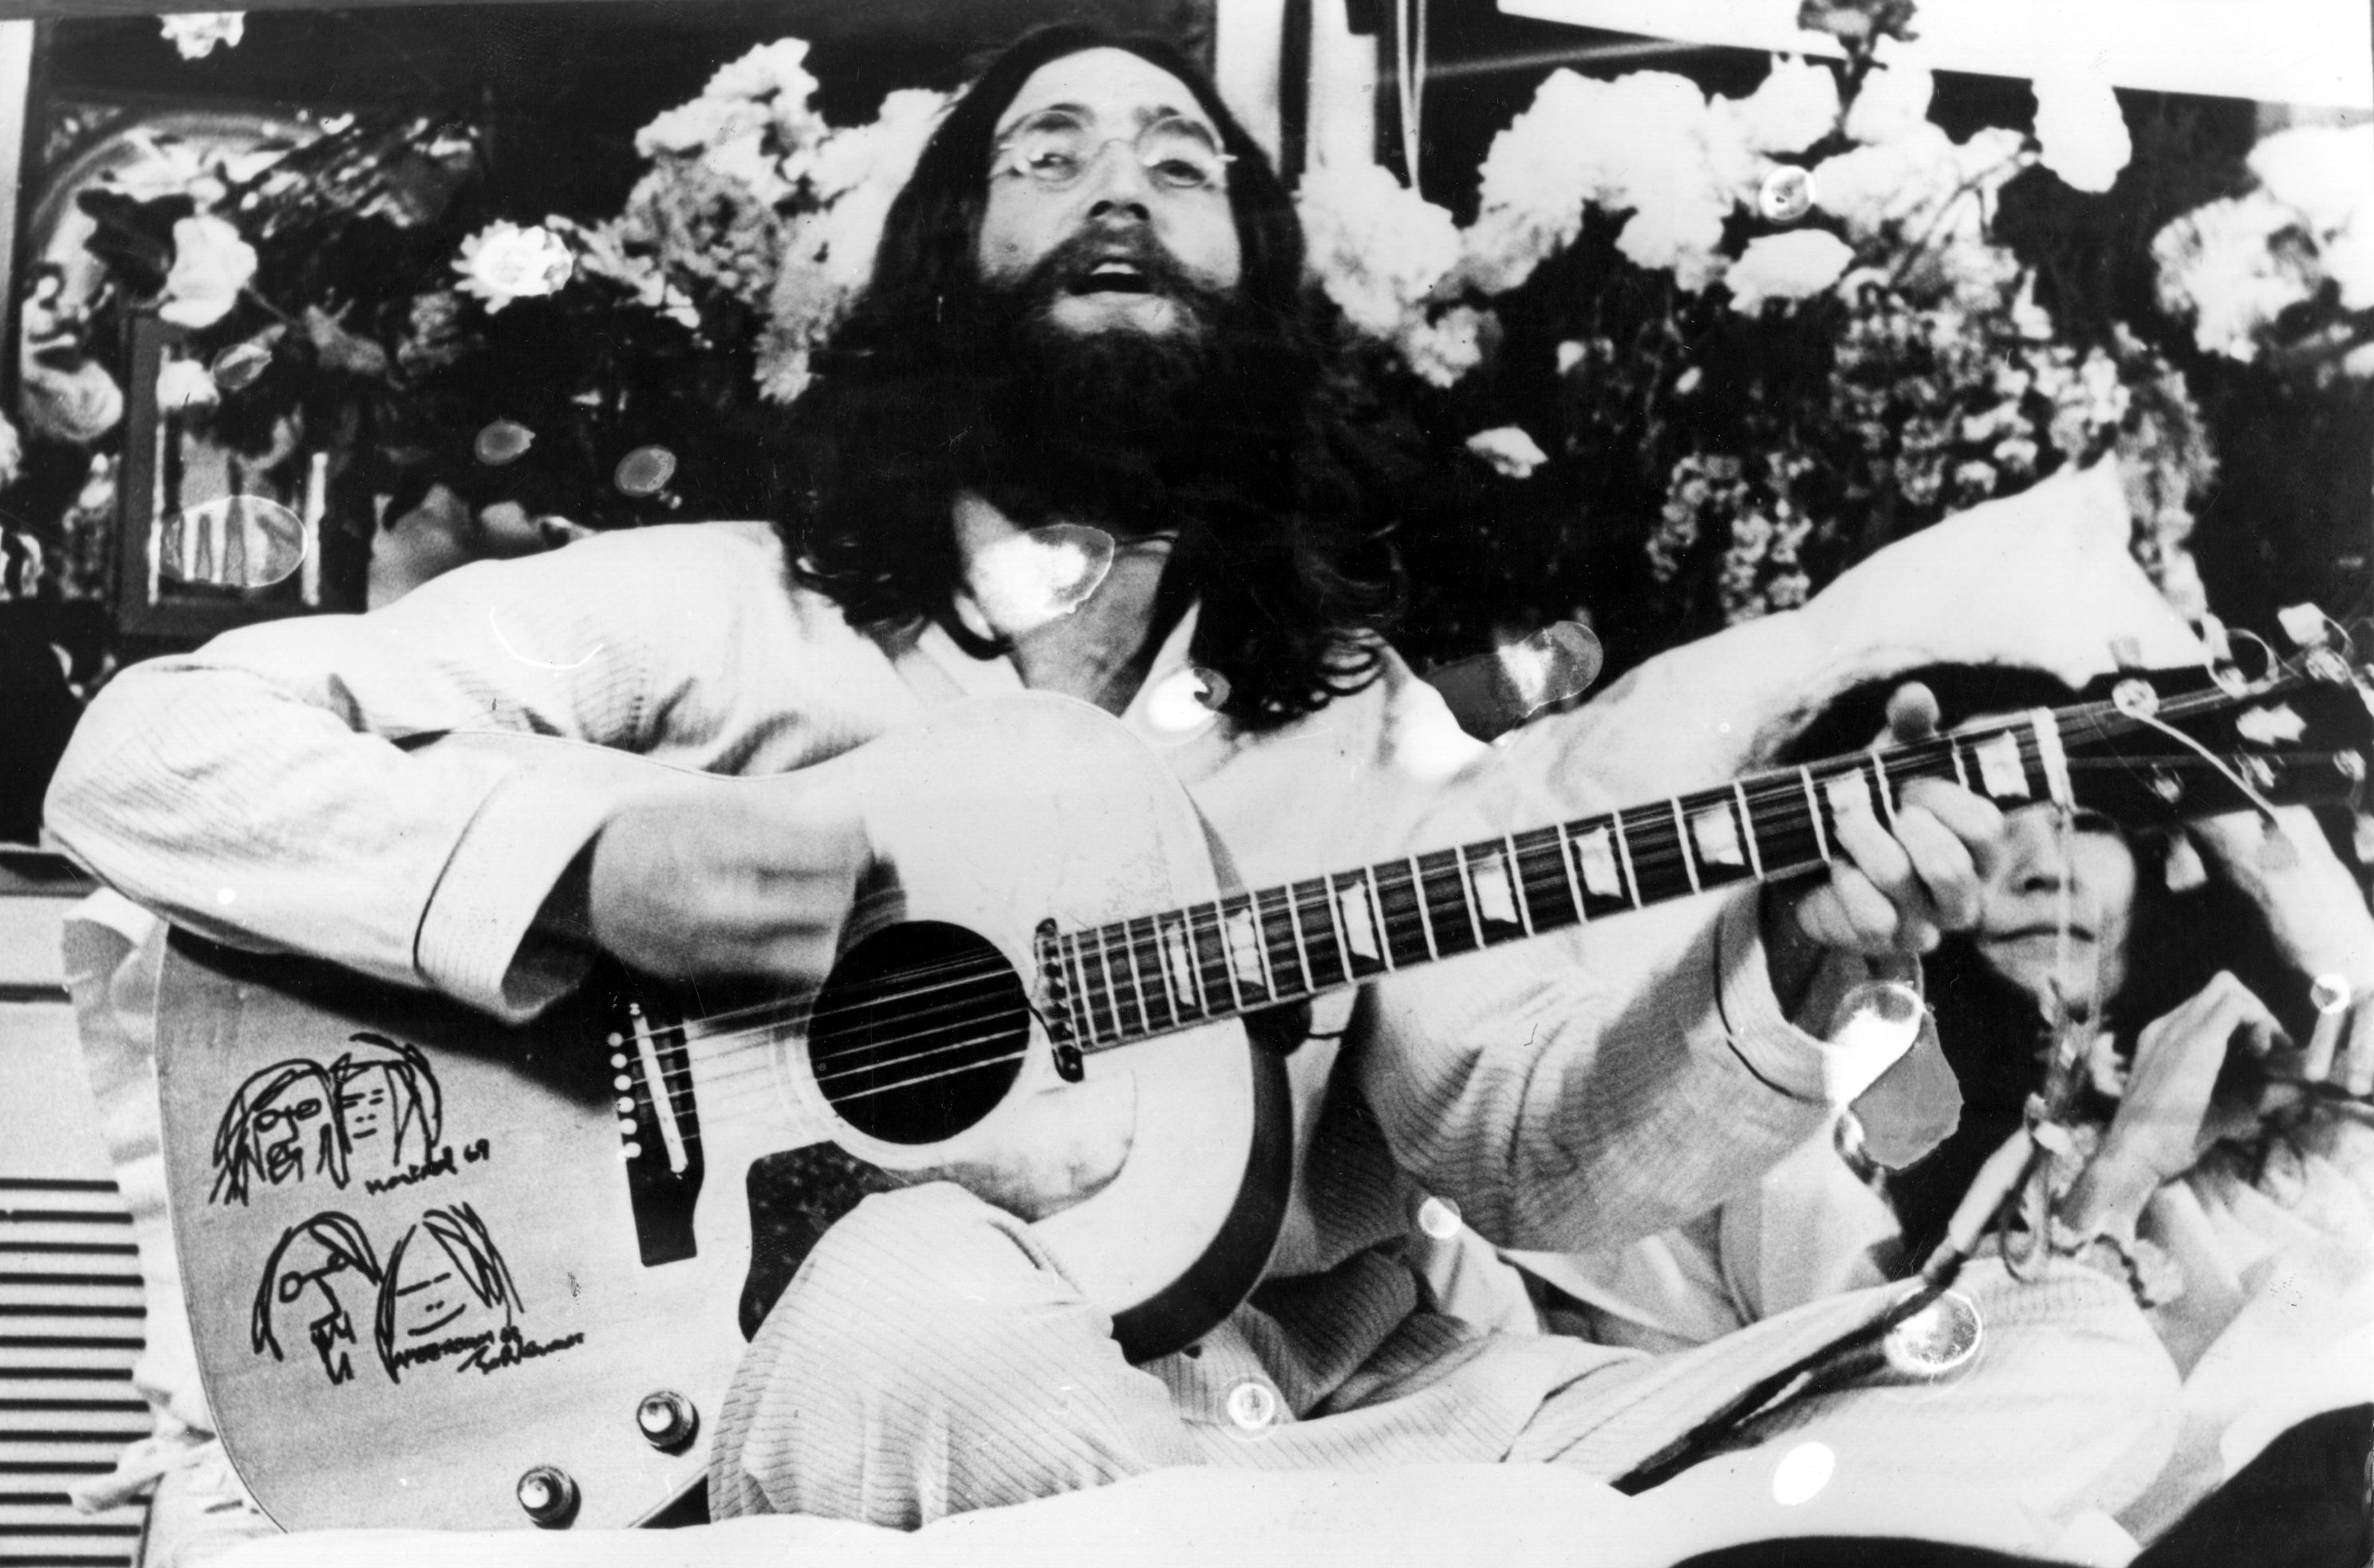 John Lennon with a guitar during The Beatles' 'The White Album' era